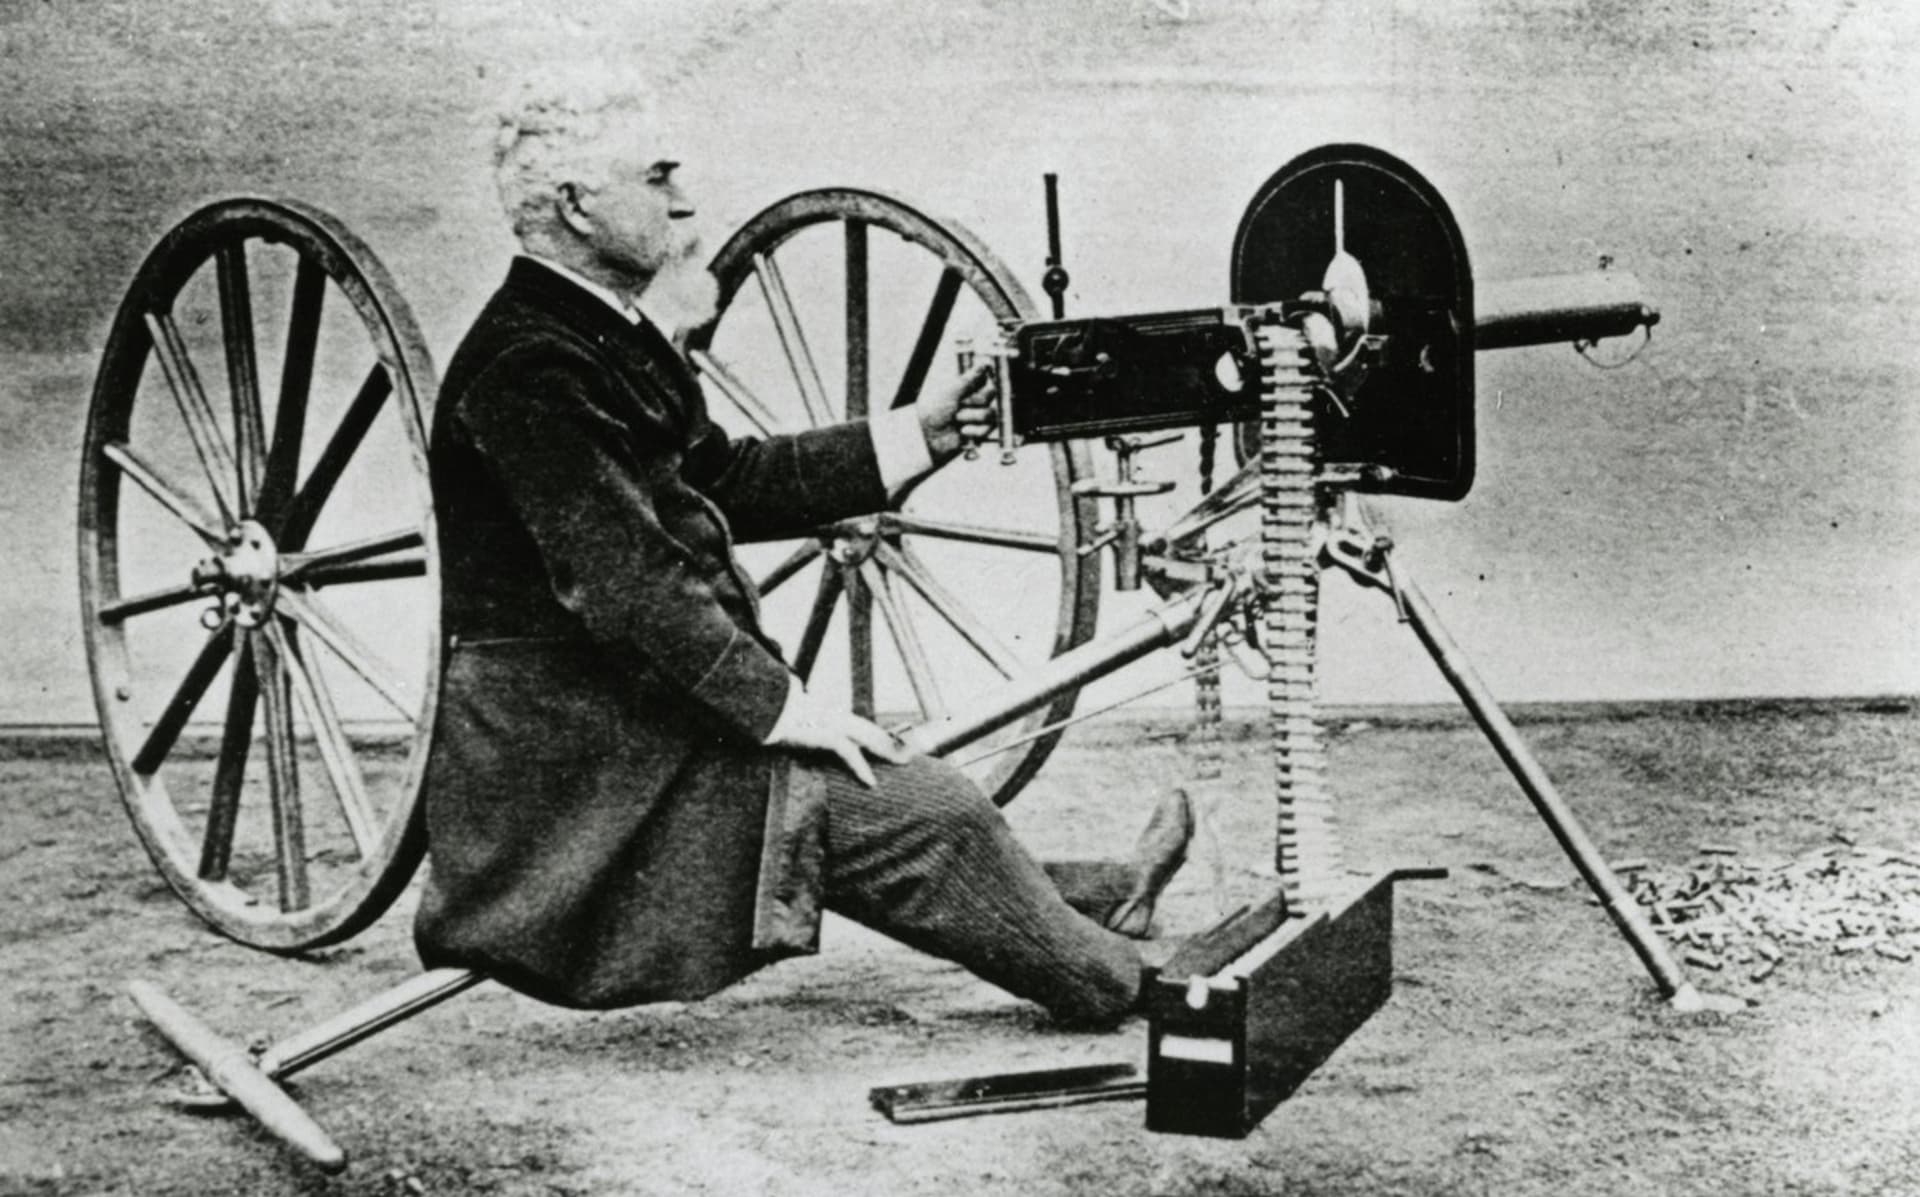 Vynálezce kulometu Hiram Stevens Maxim